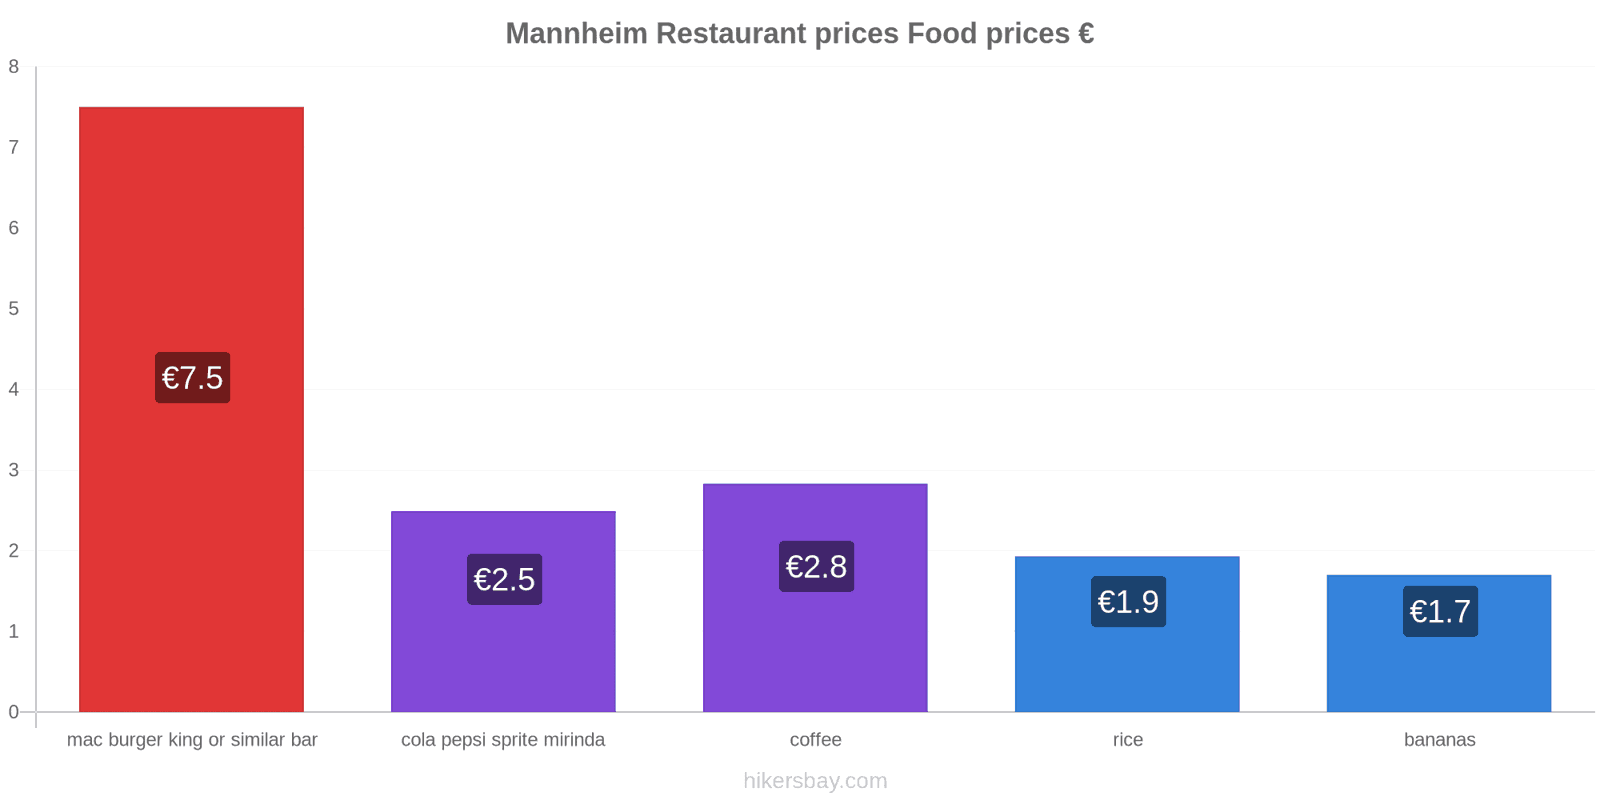 Mannheim price changes hikersbay.com